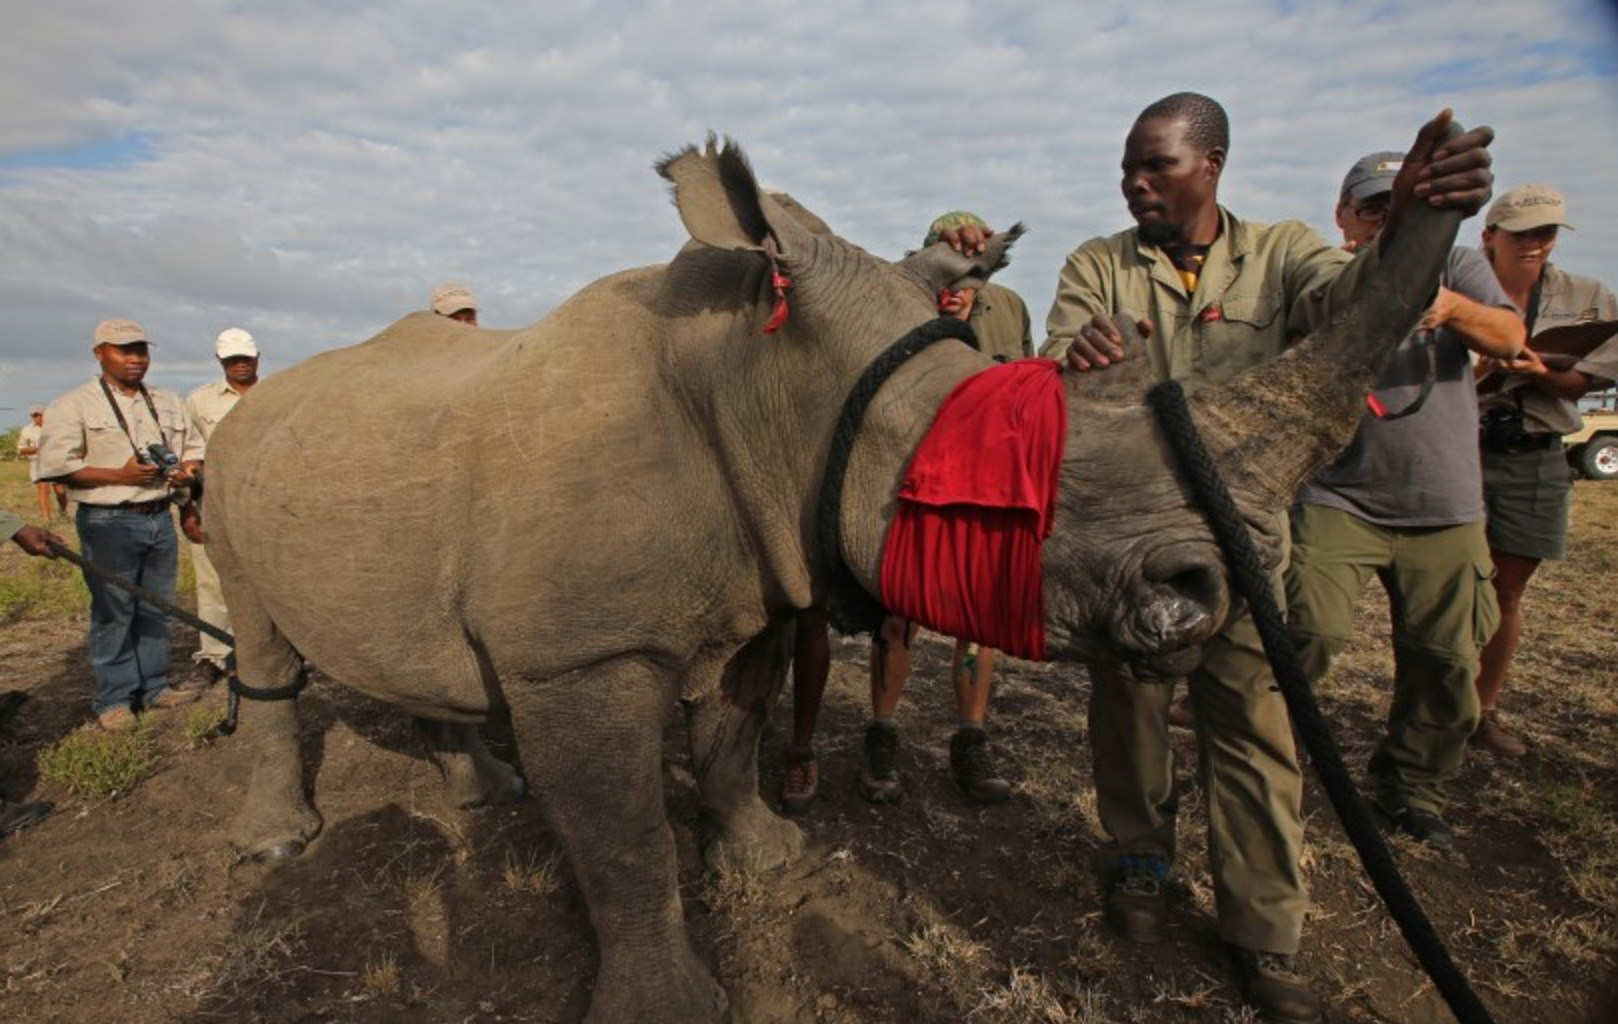 Image: Beverly Joubert/Rhinos Without Borders website